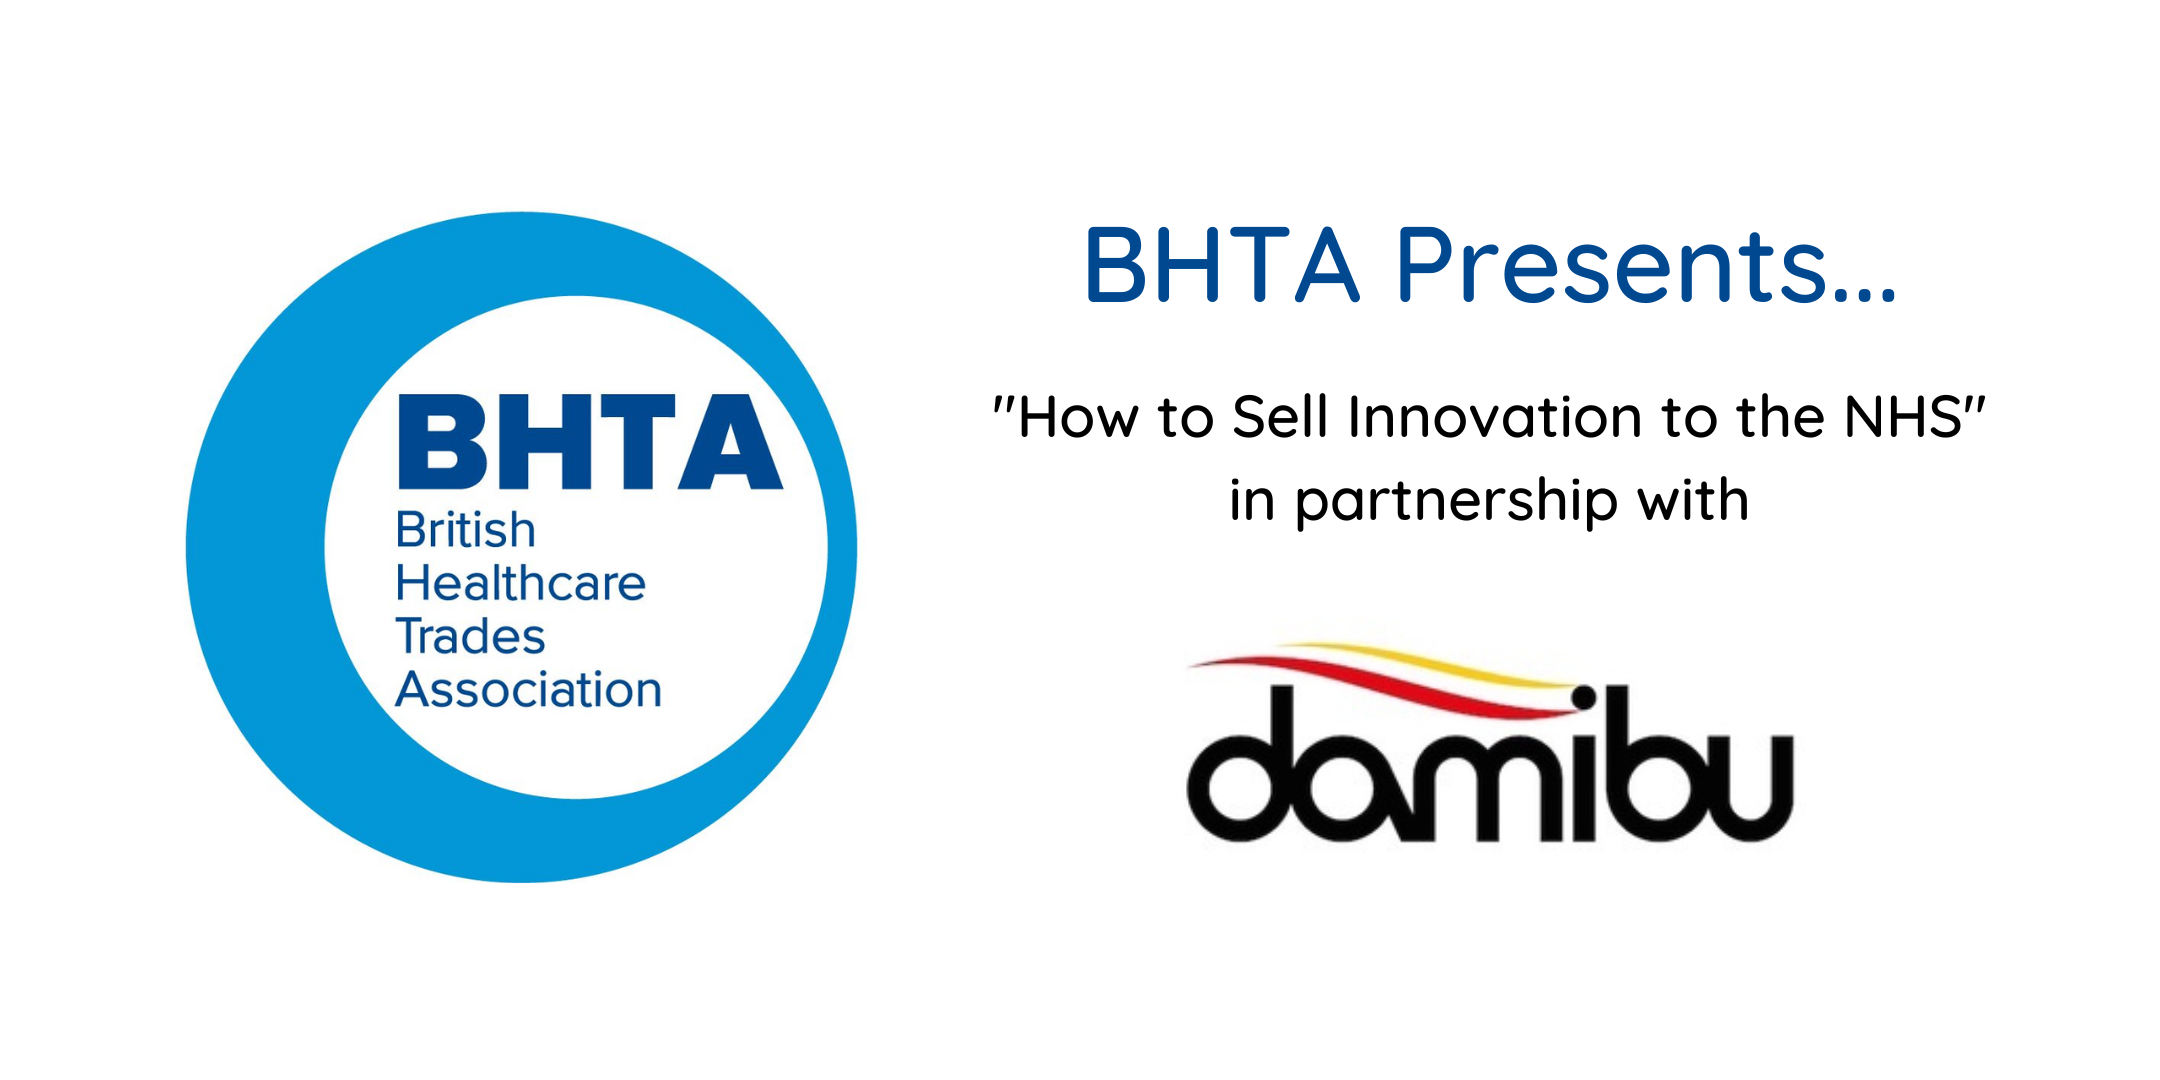 BHTA提出…“如何向NHS出售创新”